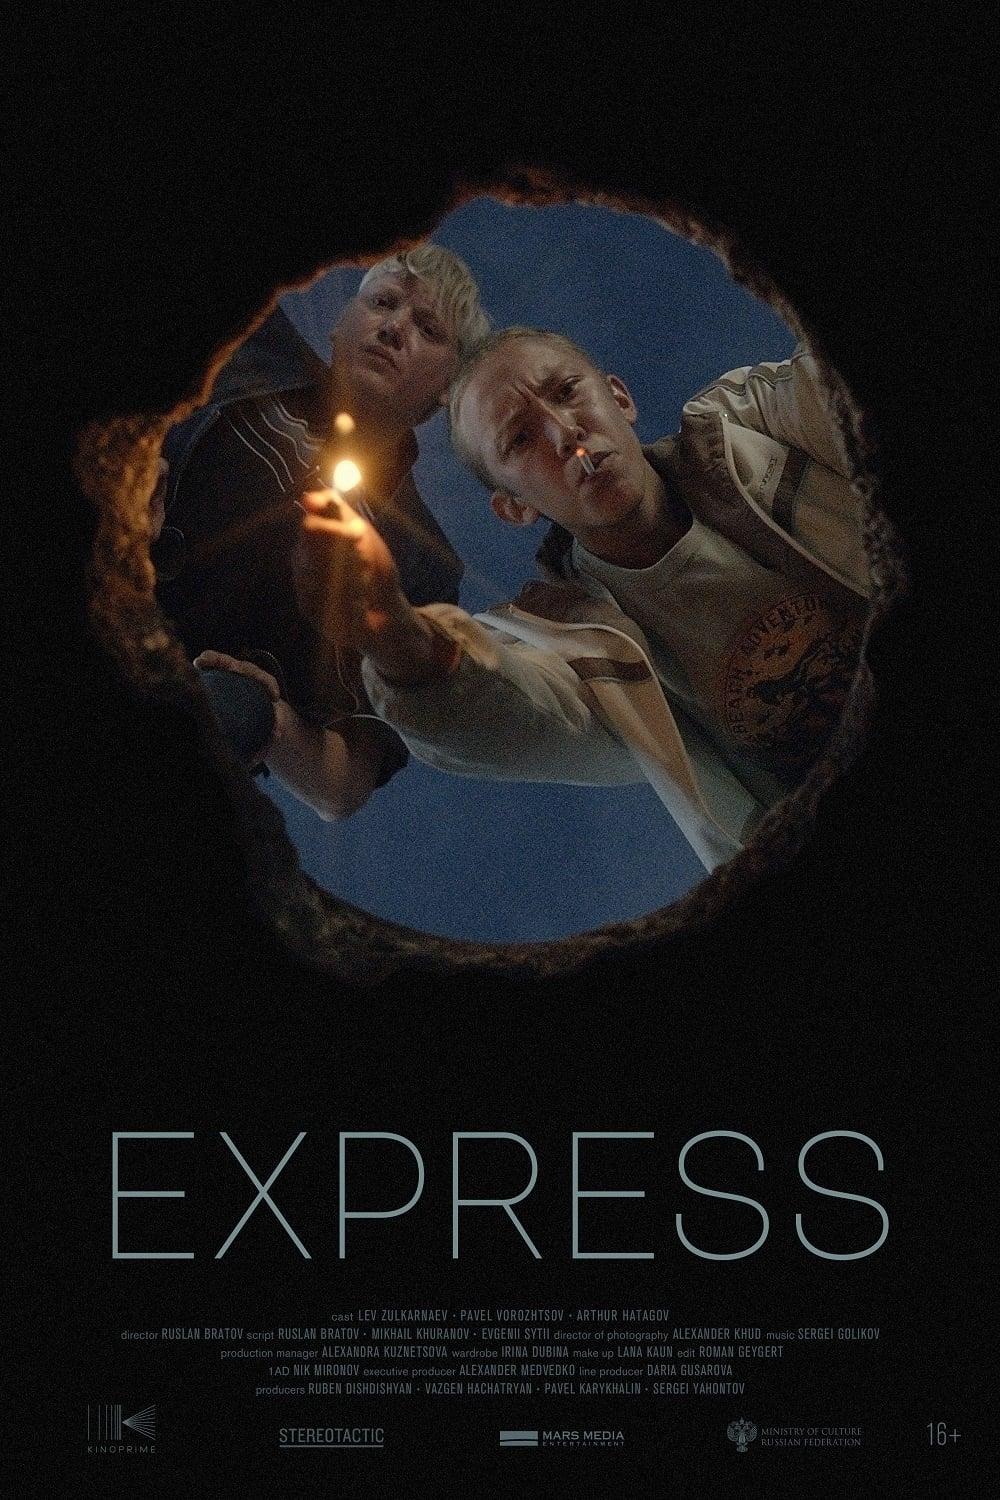 Express poster